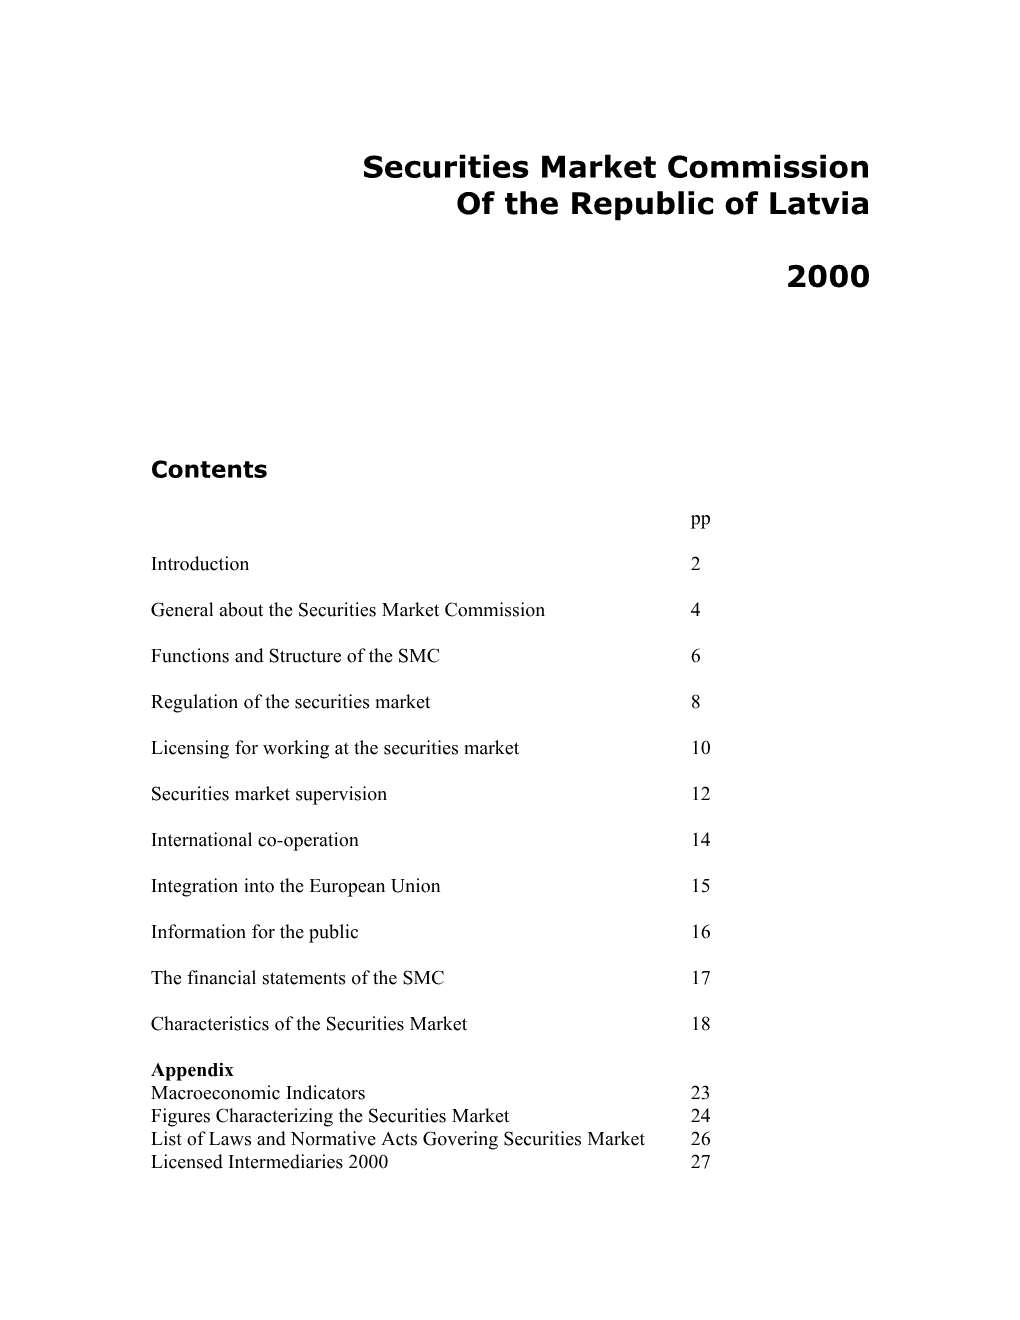 Of the Republic of Latvia